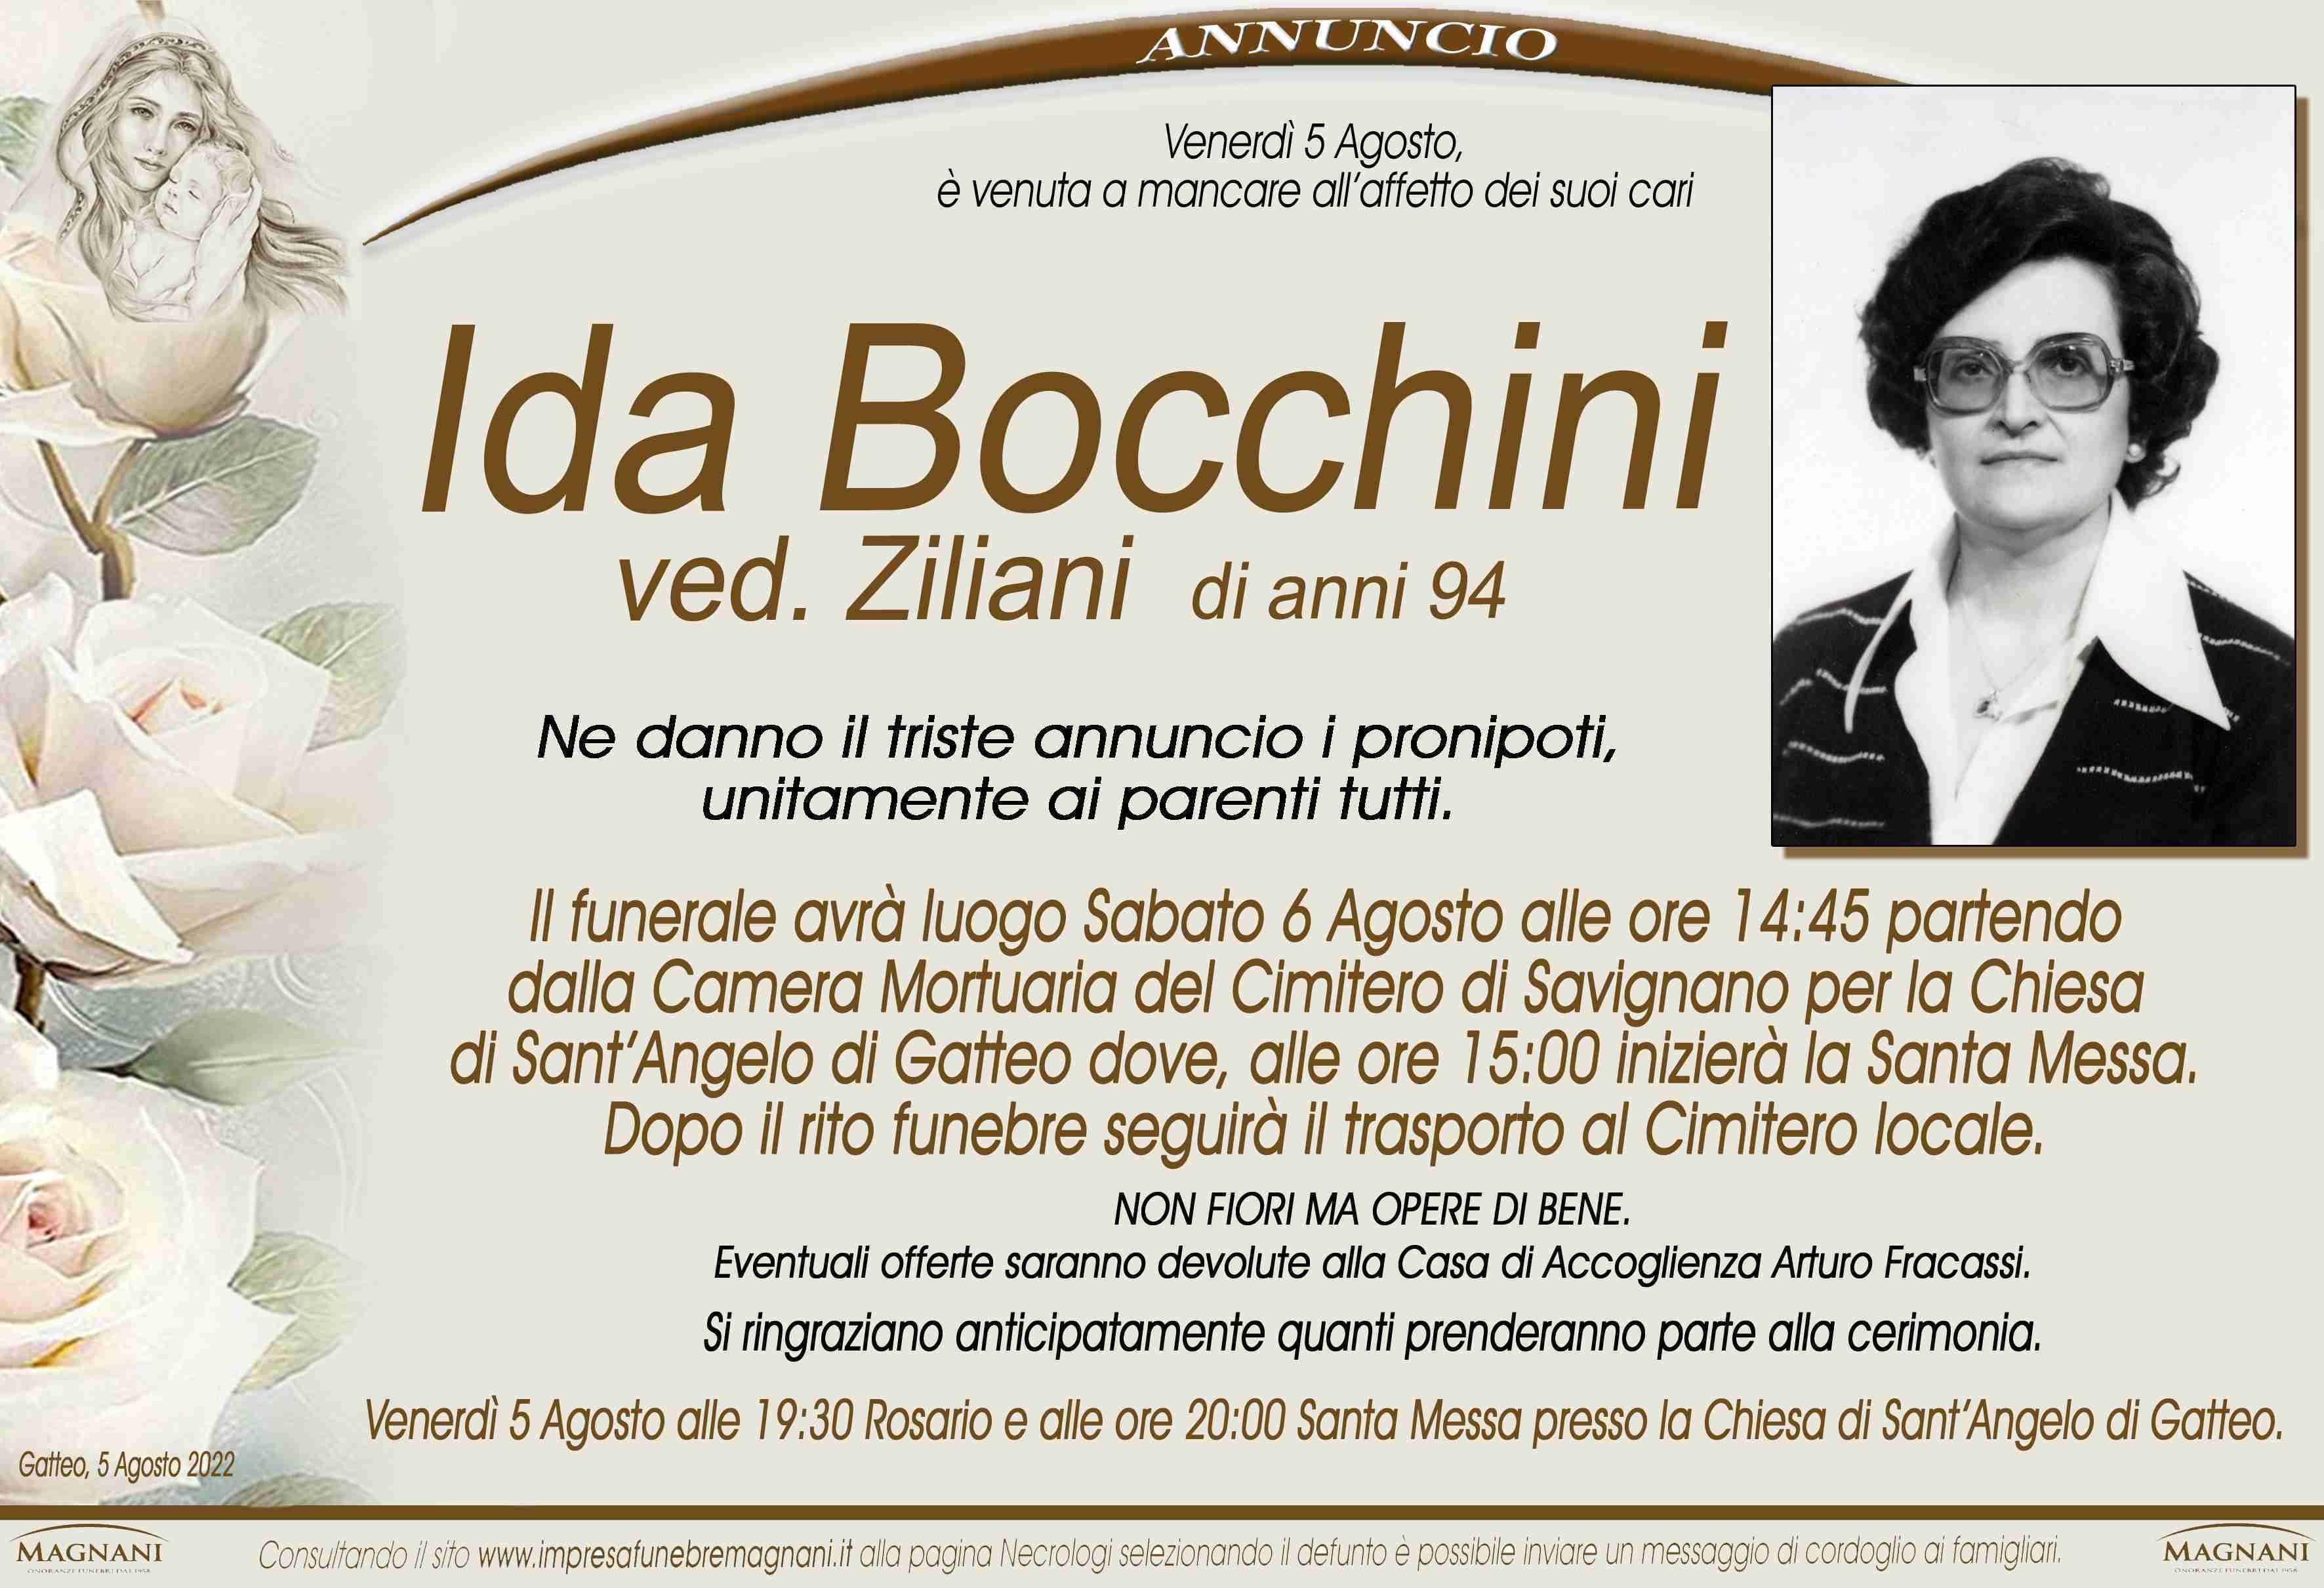 Ida Bocchini